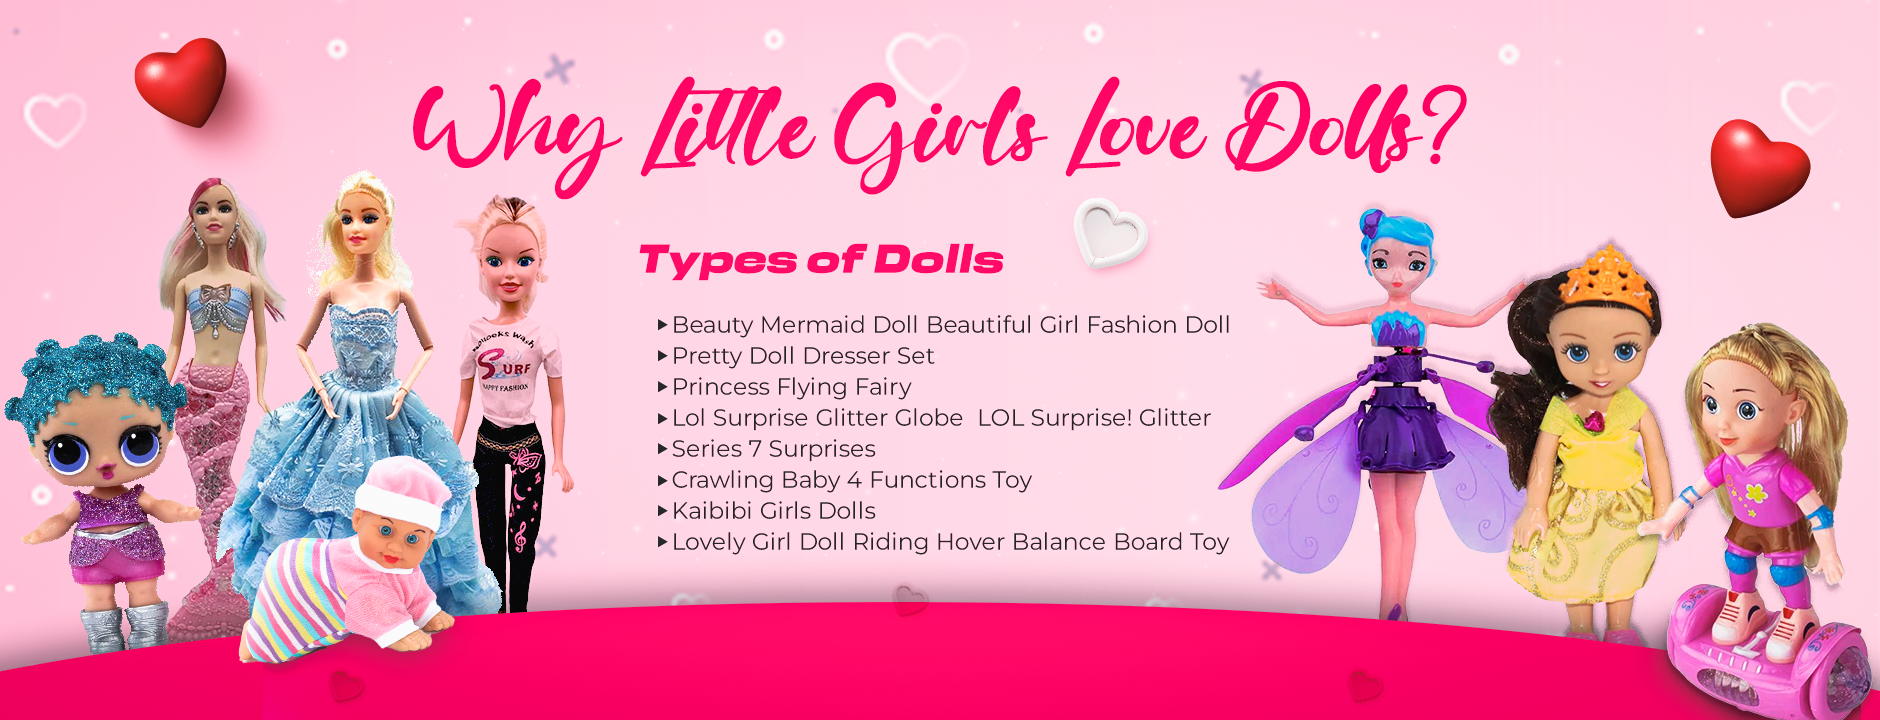 Why Little Girls Love Dolls?